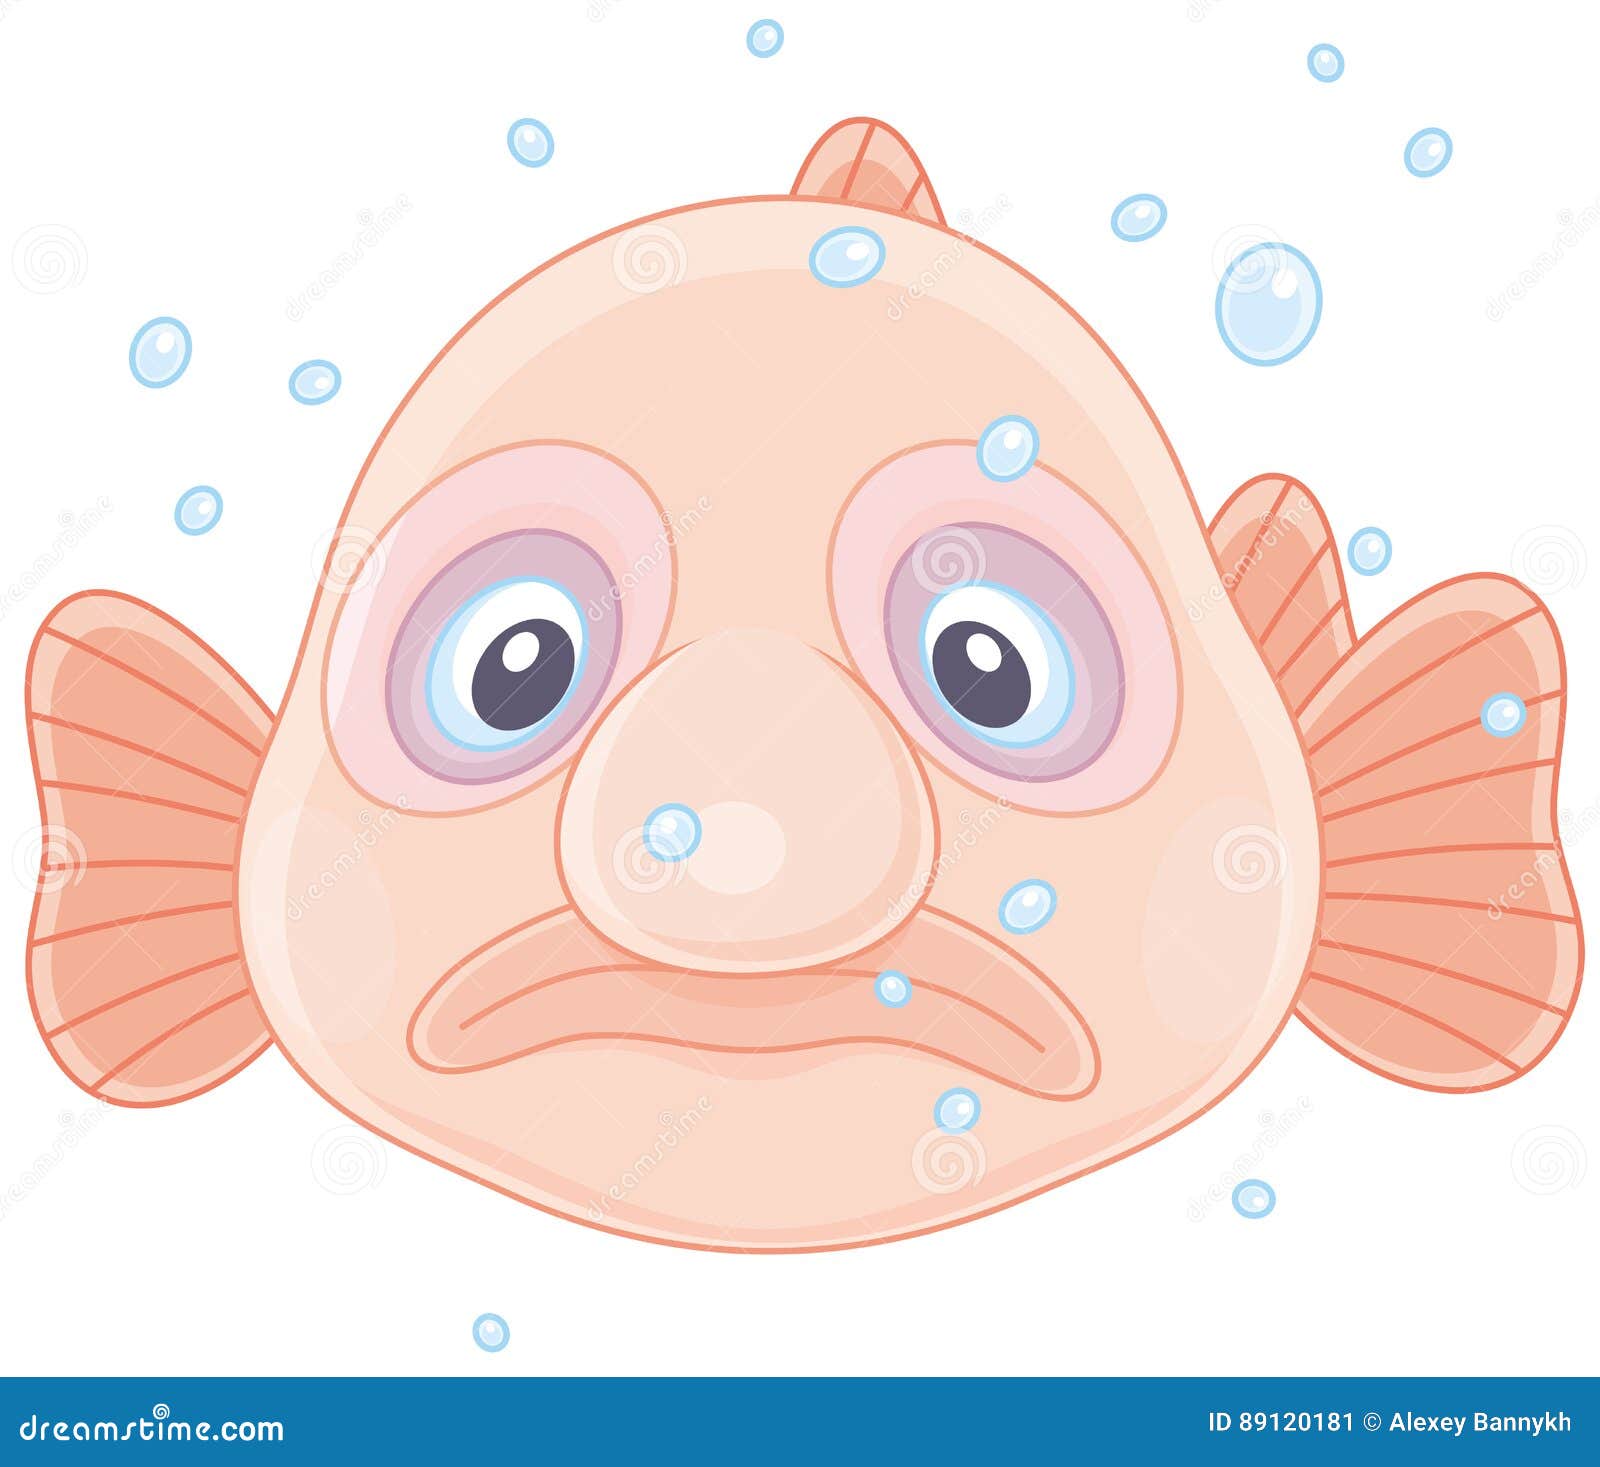 Blob fish stock vector. Illustration of bathypelagic - 89120181